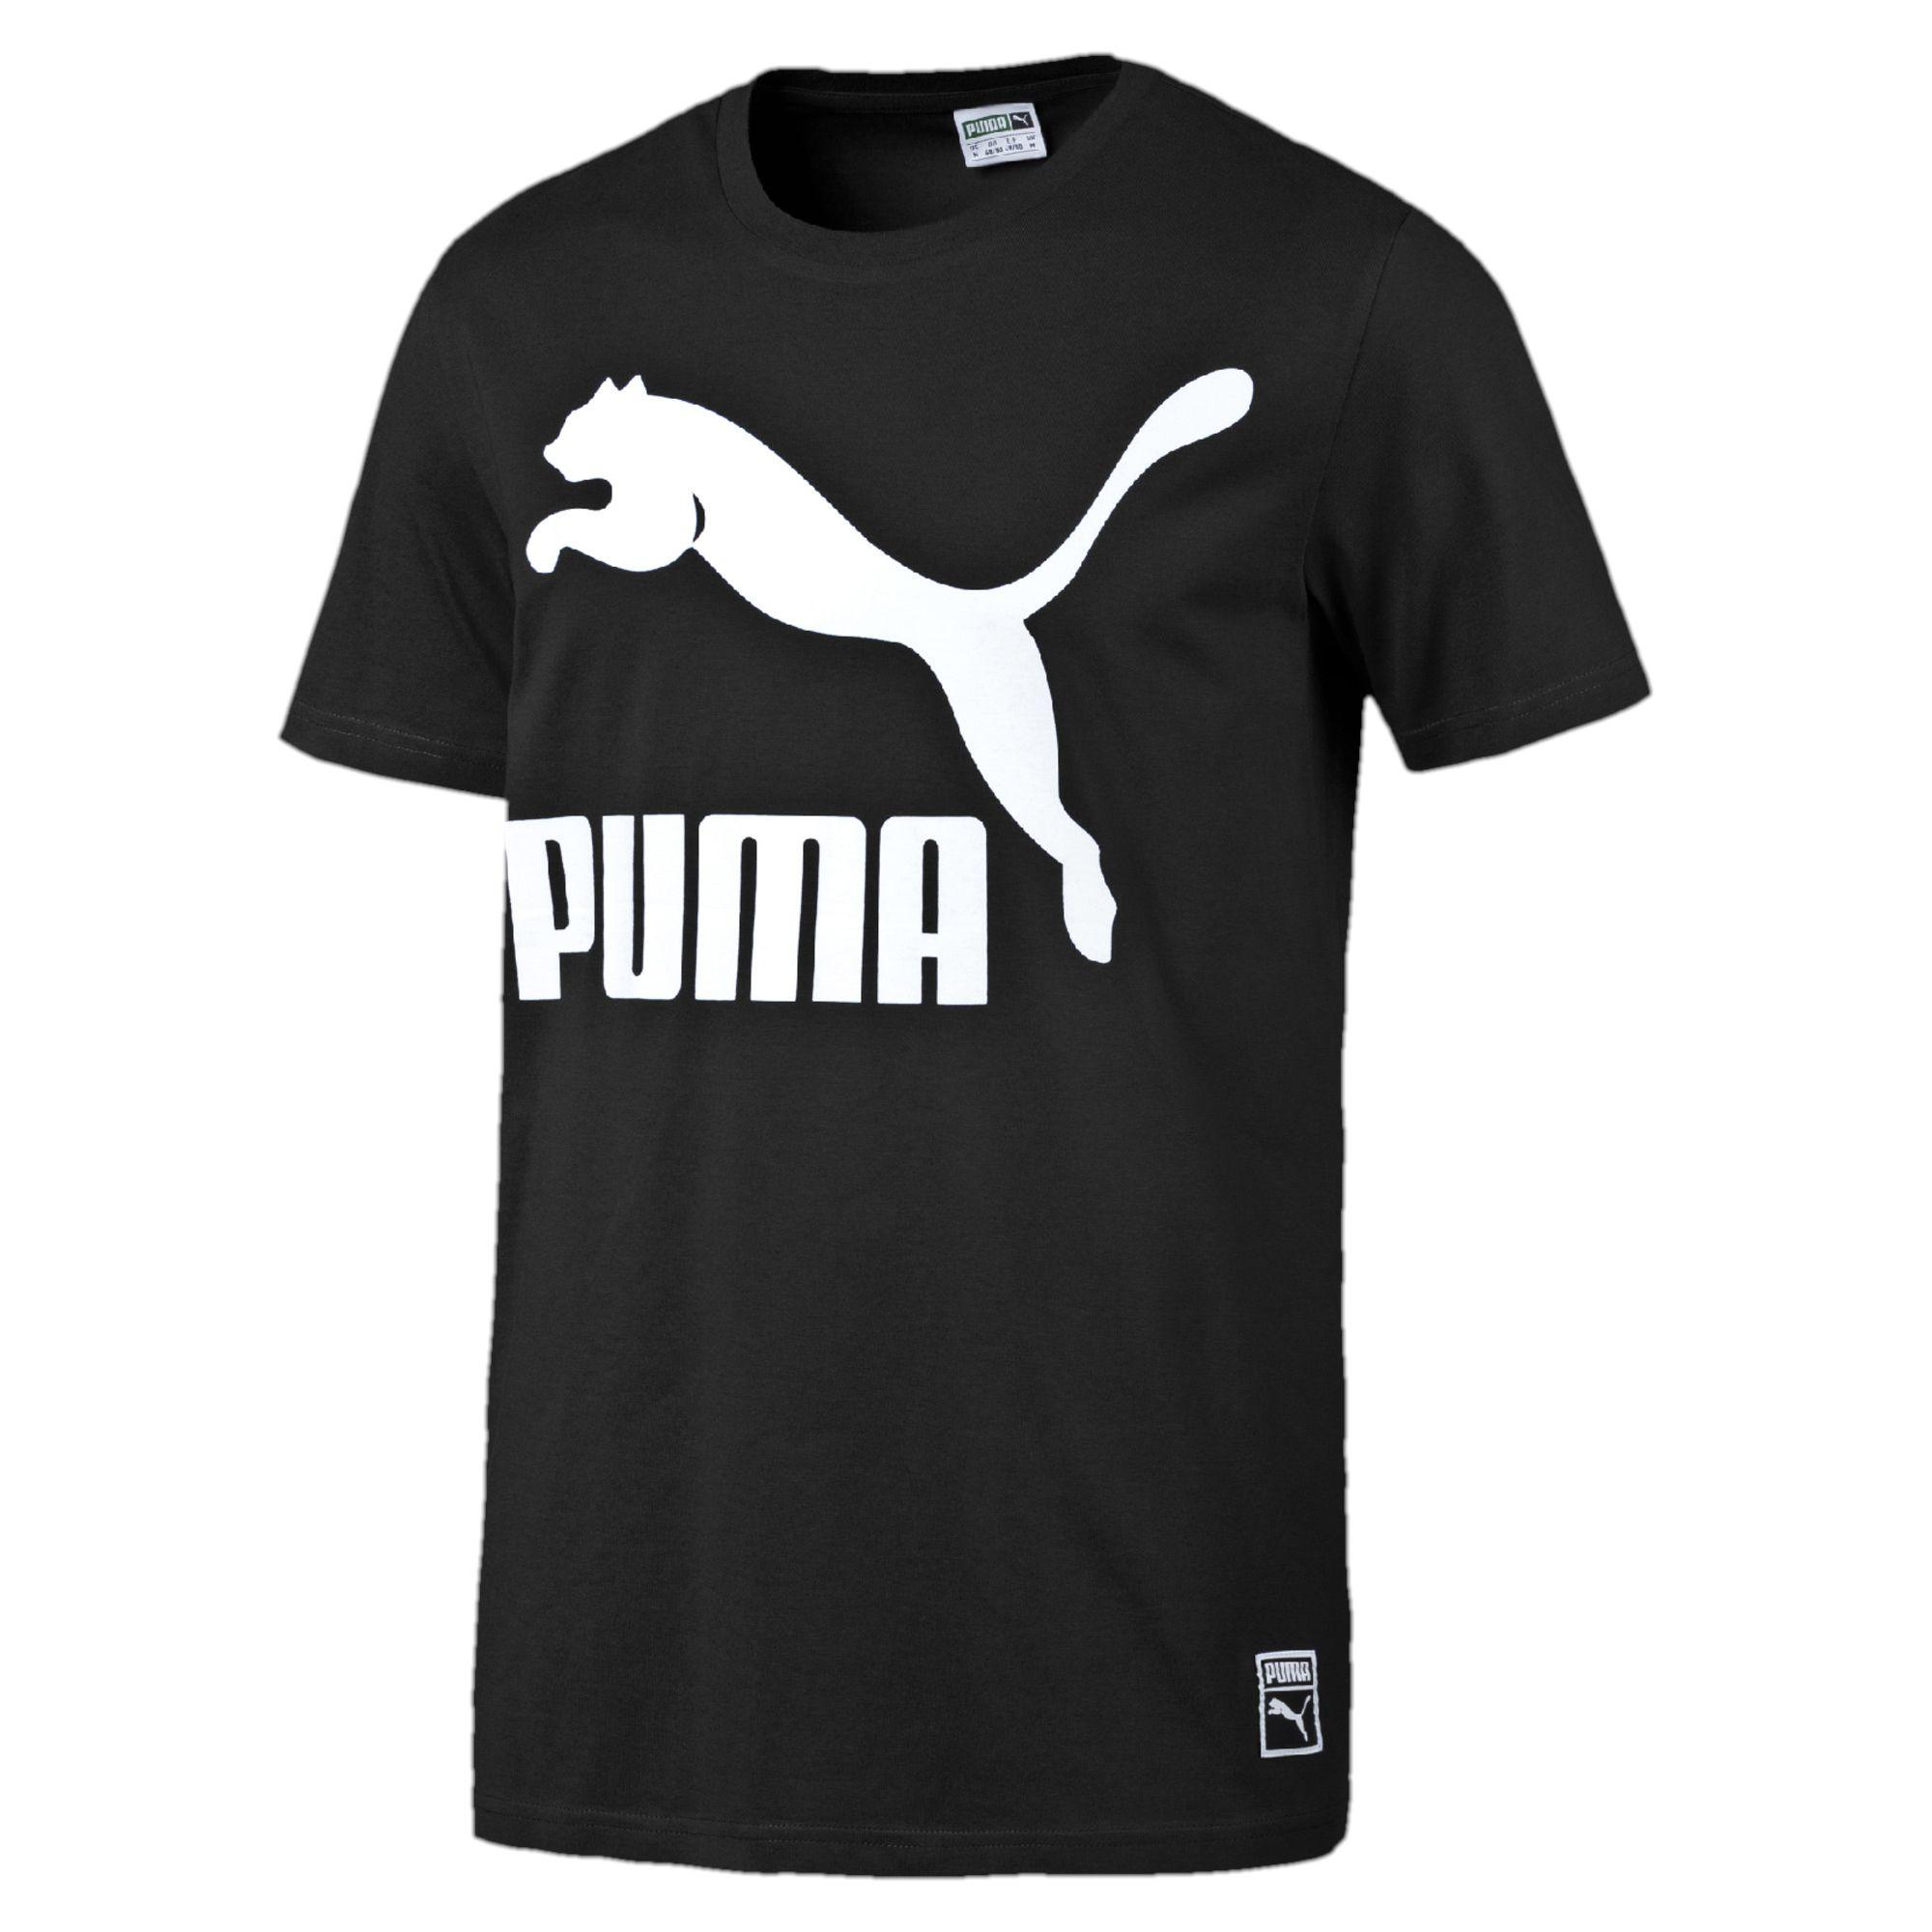 Black and White Puma Logo - Hot Sale Online Puma T-Shirt Men's Archive Logo Black-White | IGAM